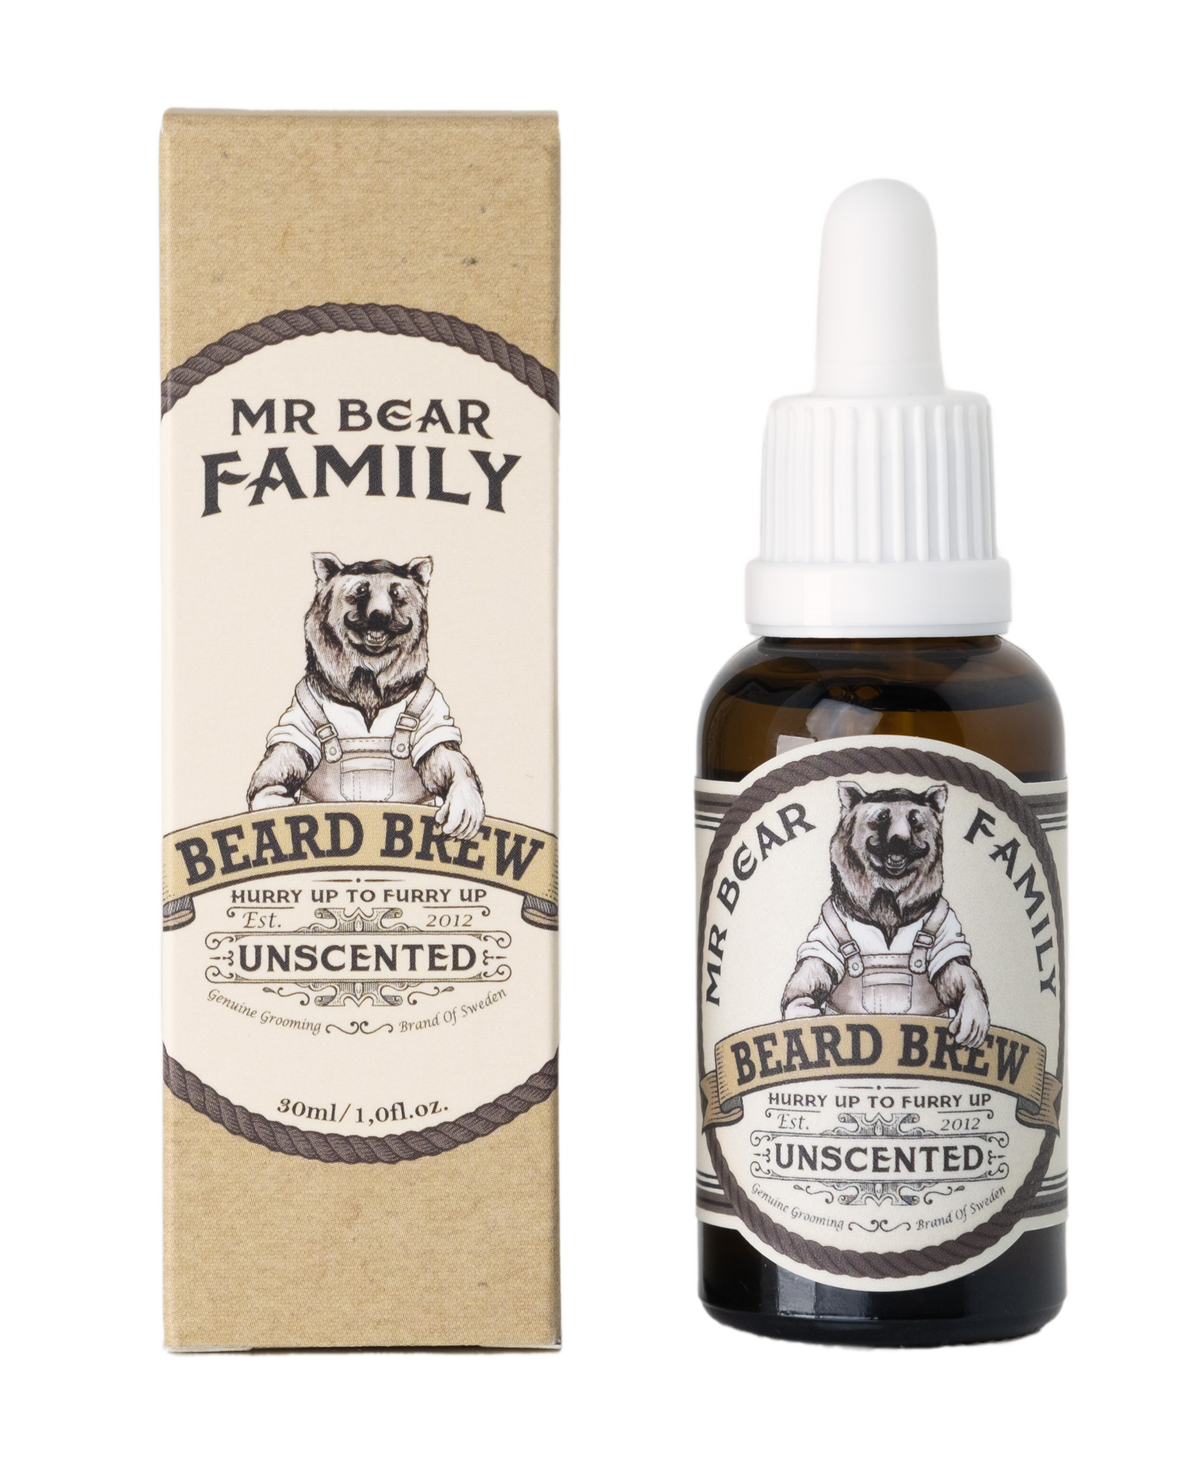 Mr. Bear Family - Beard Brew - Unscented - Skeggolía - Ilmlaus